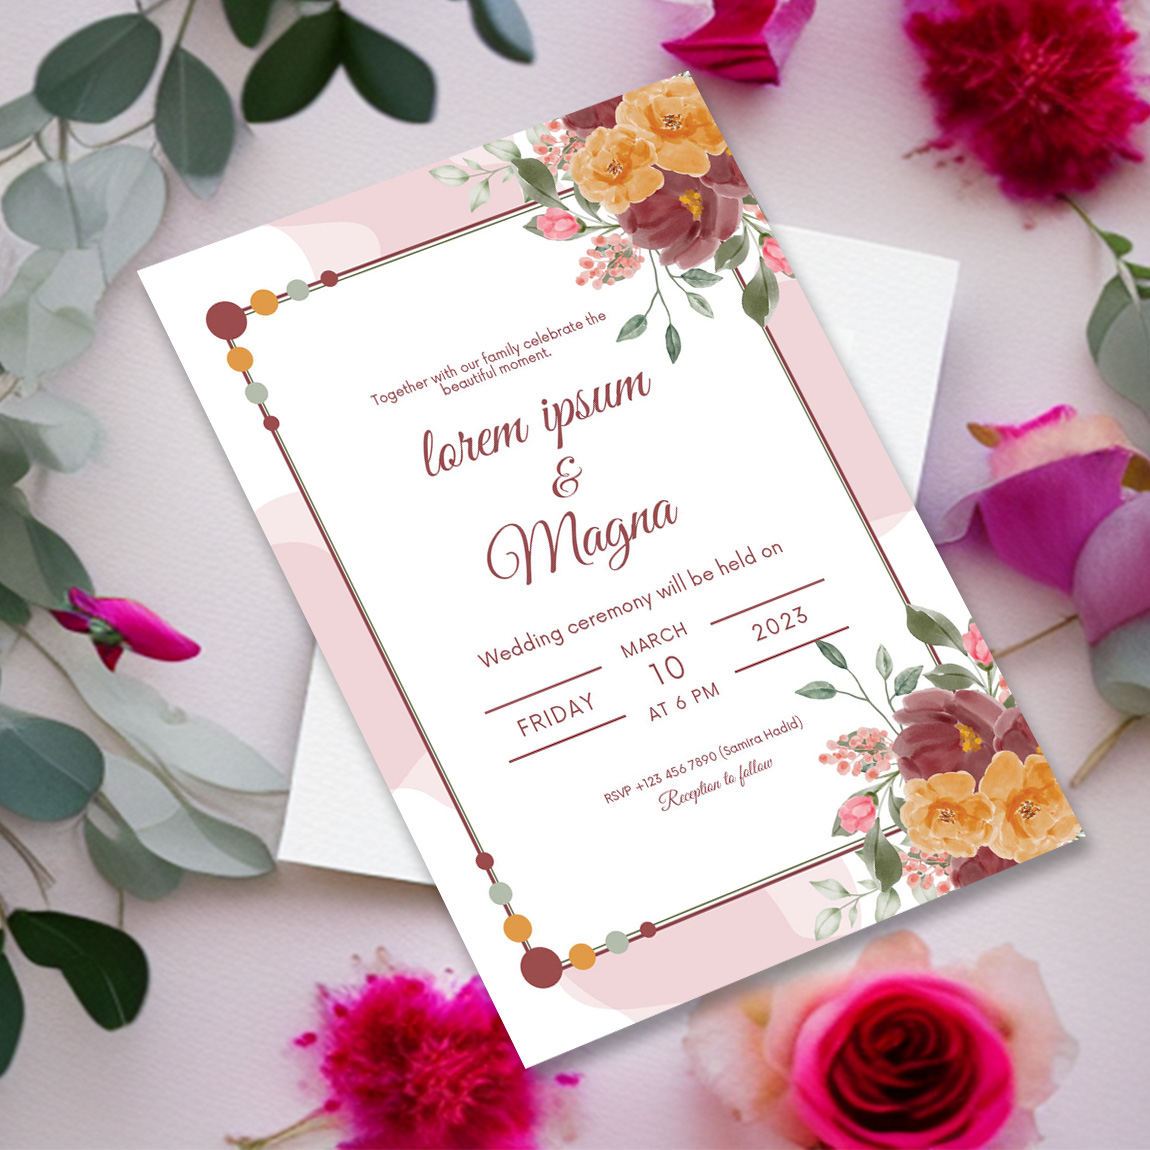 Image with elegant wedding invitation with floral design.